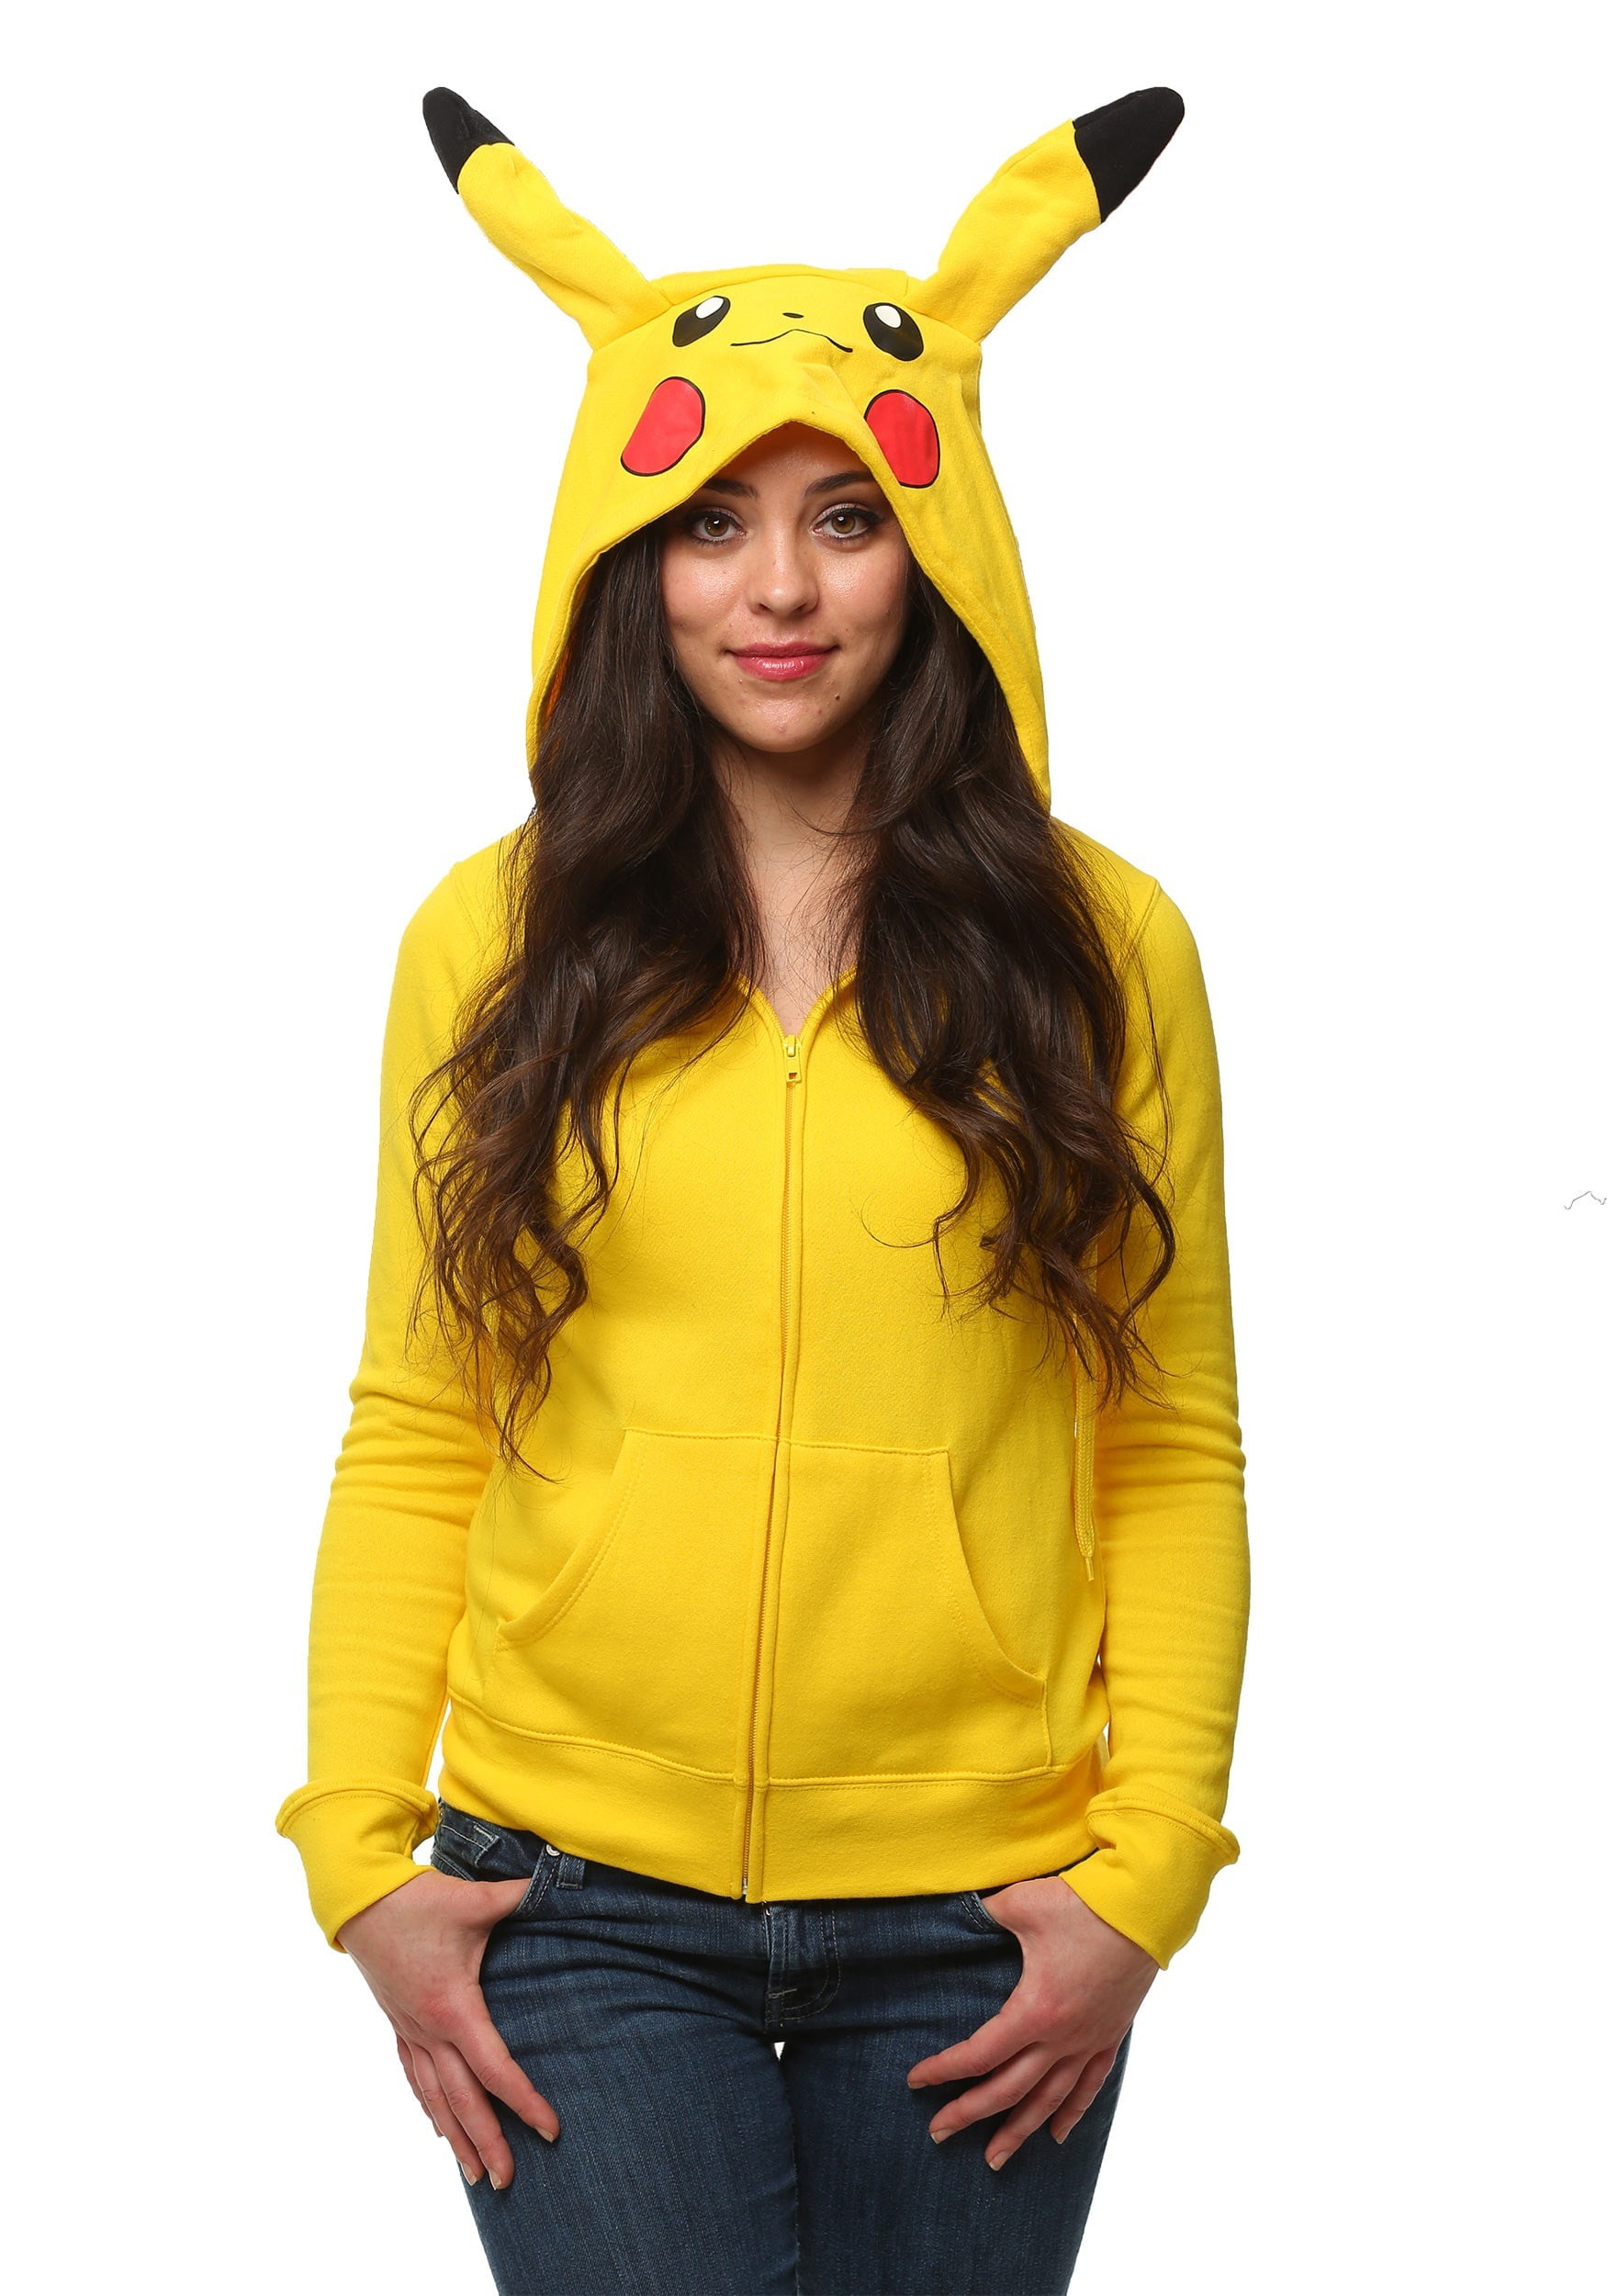 AJh,pikachu costume hoodie,hrdsindia.org